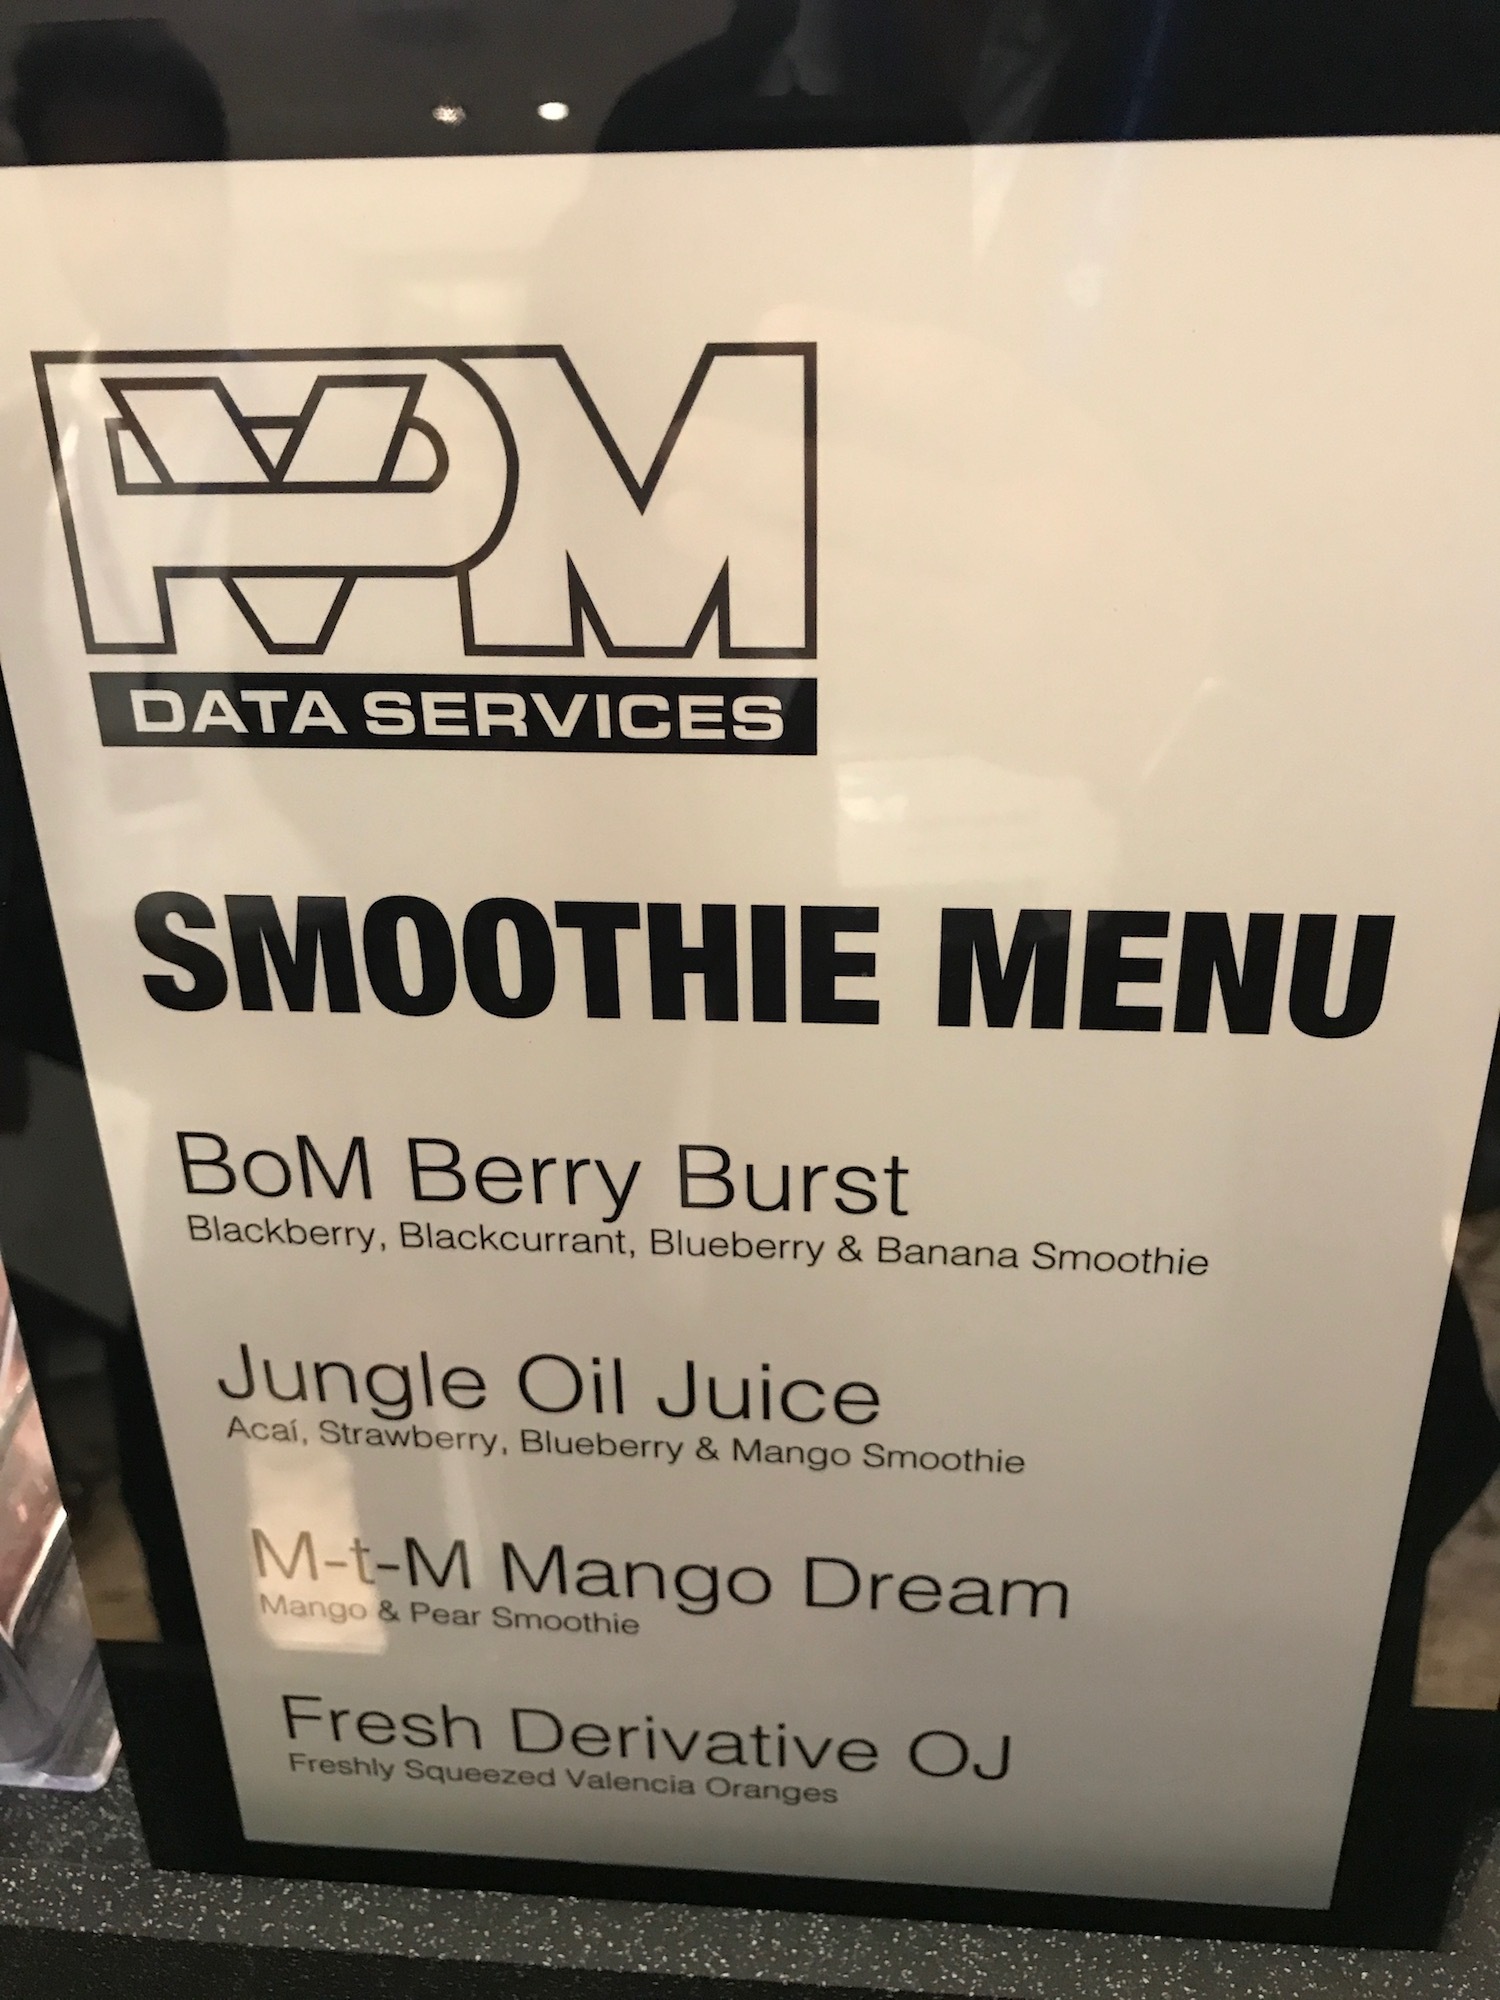 Smoothie menu at ComRisk conference